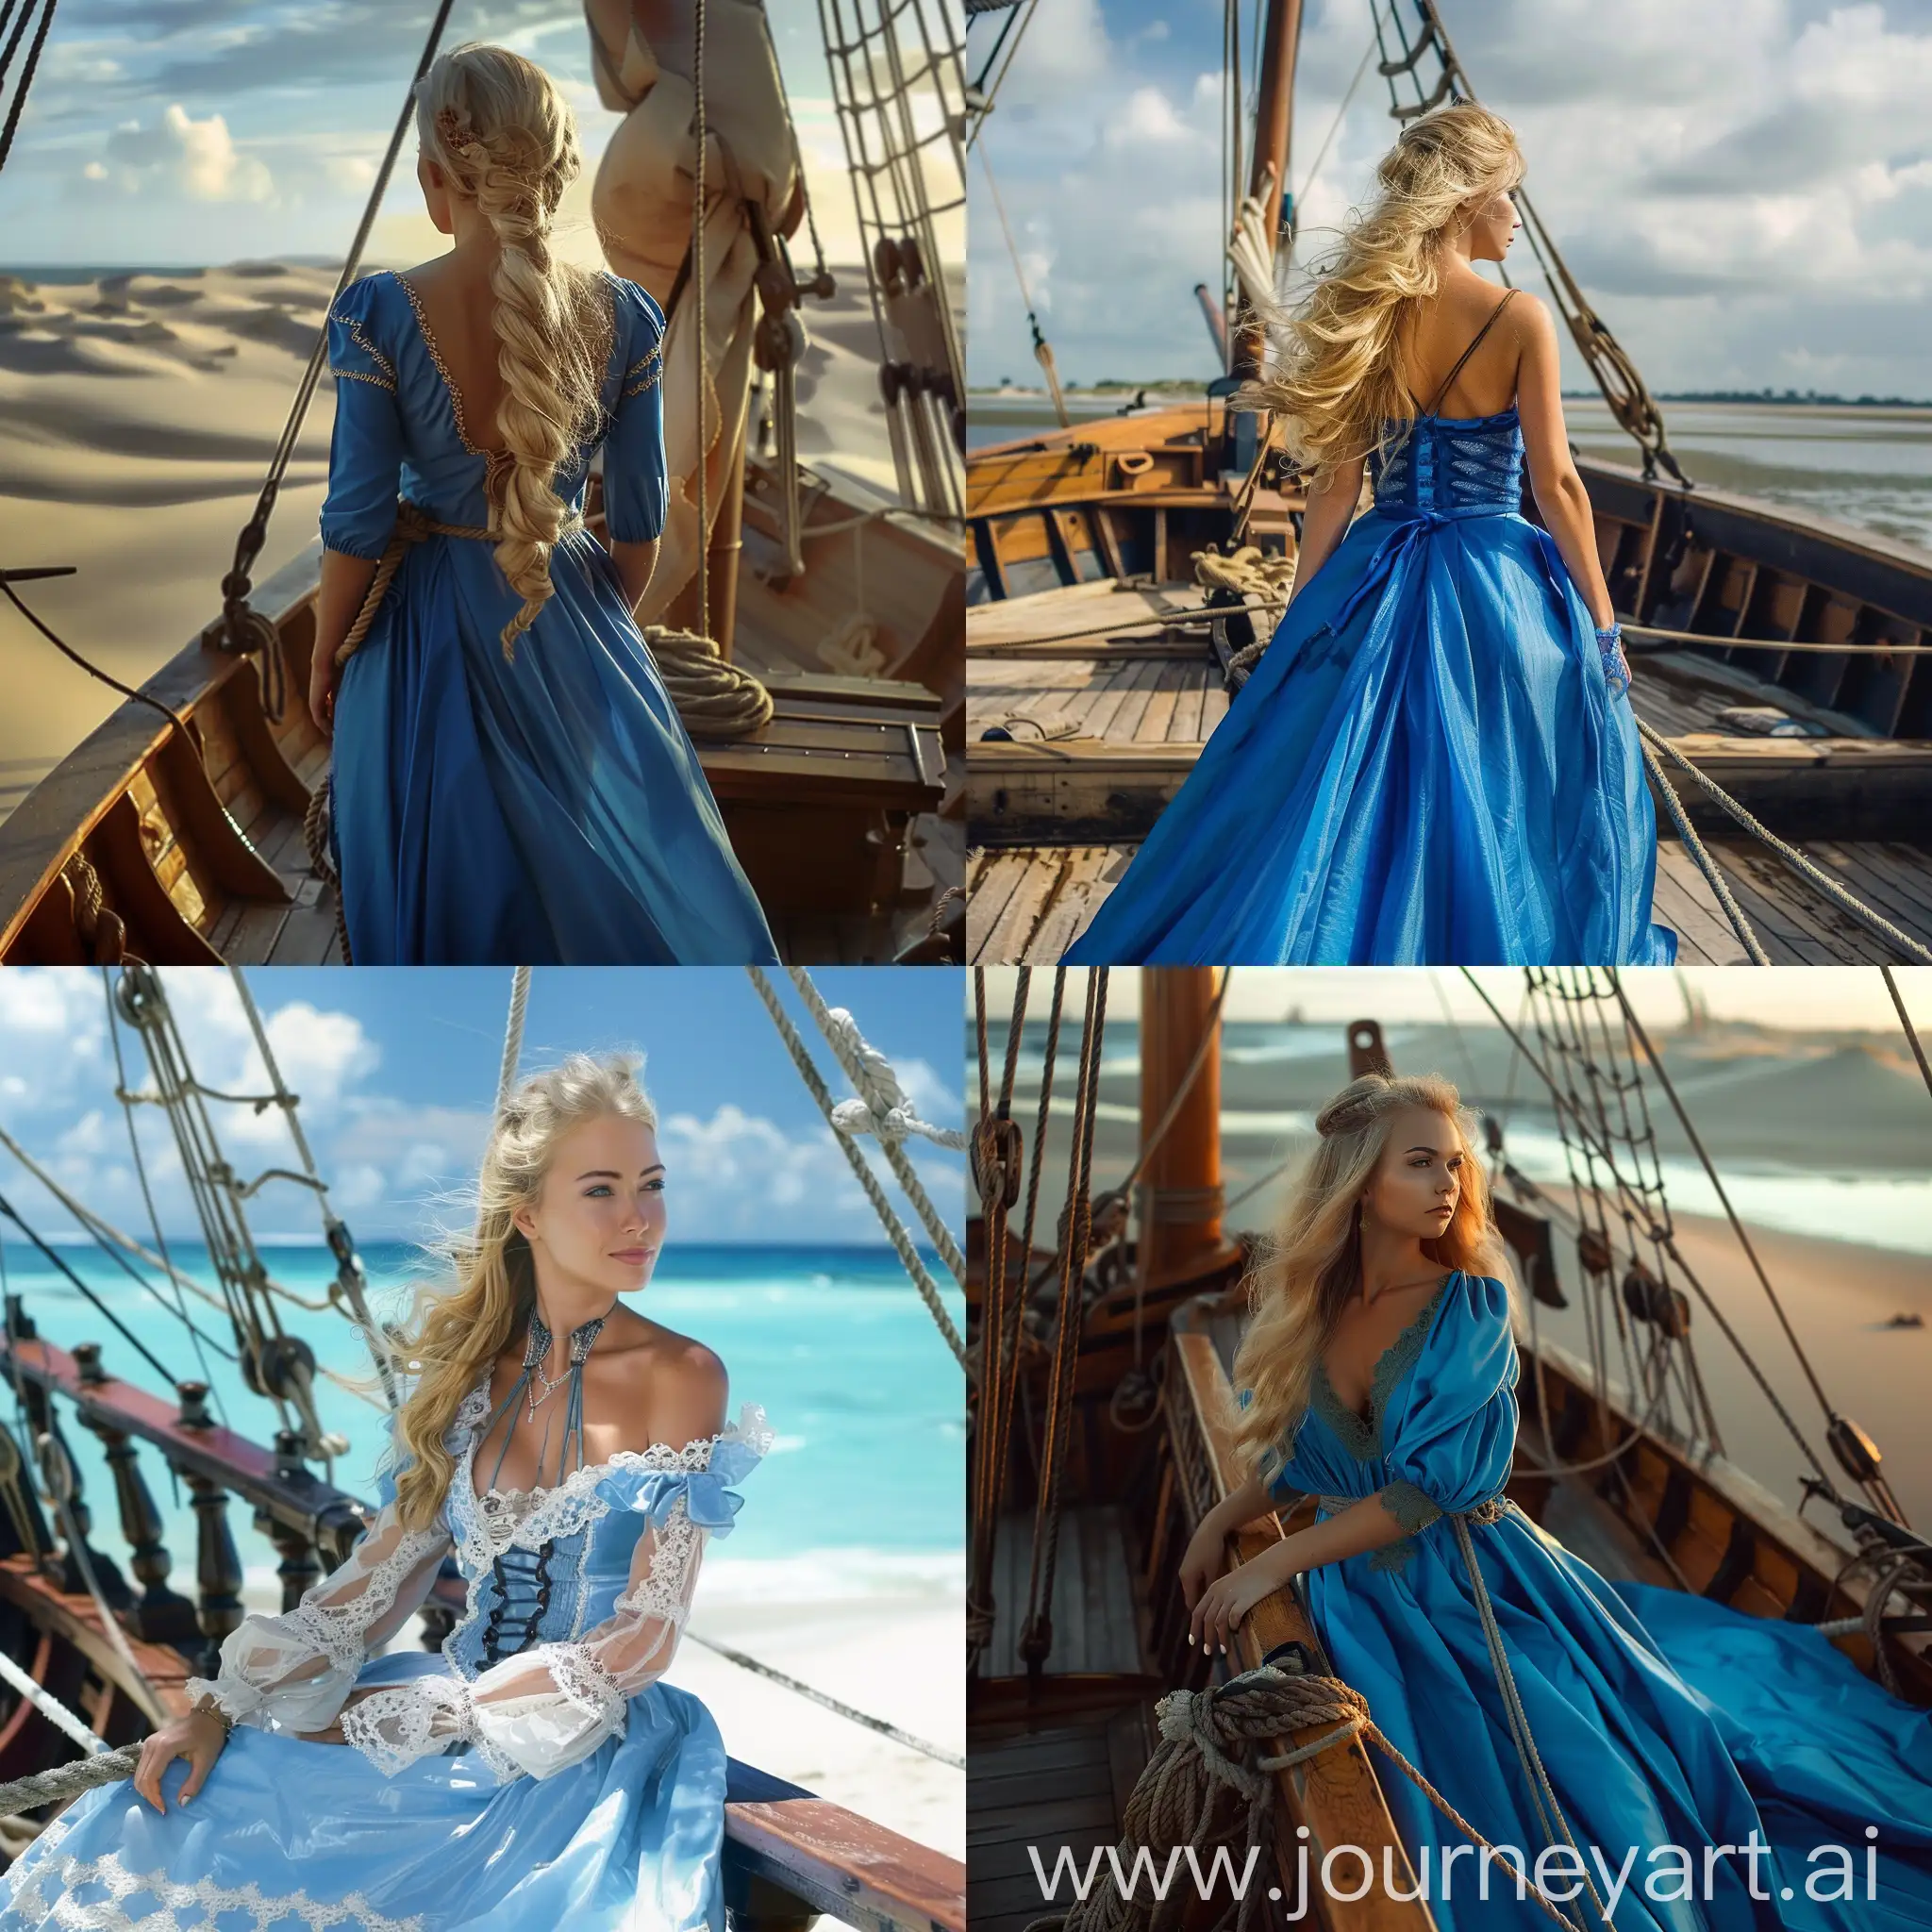 beautiful blonde blue dress on ship from 17th century,near beautiful sand island